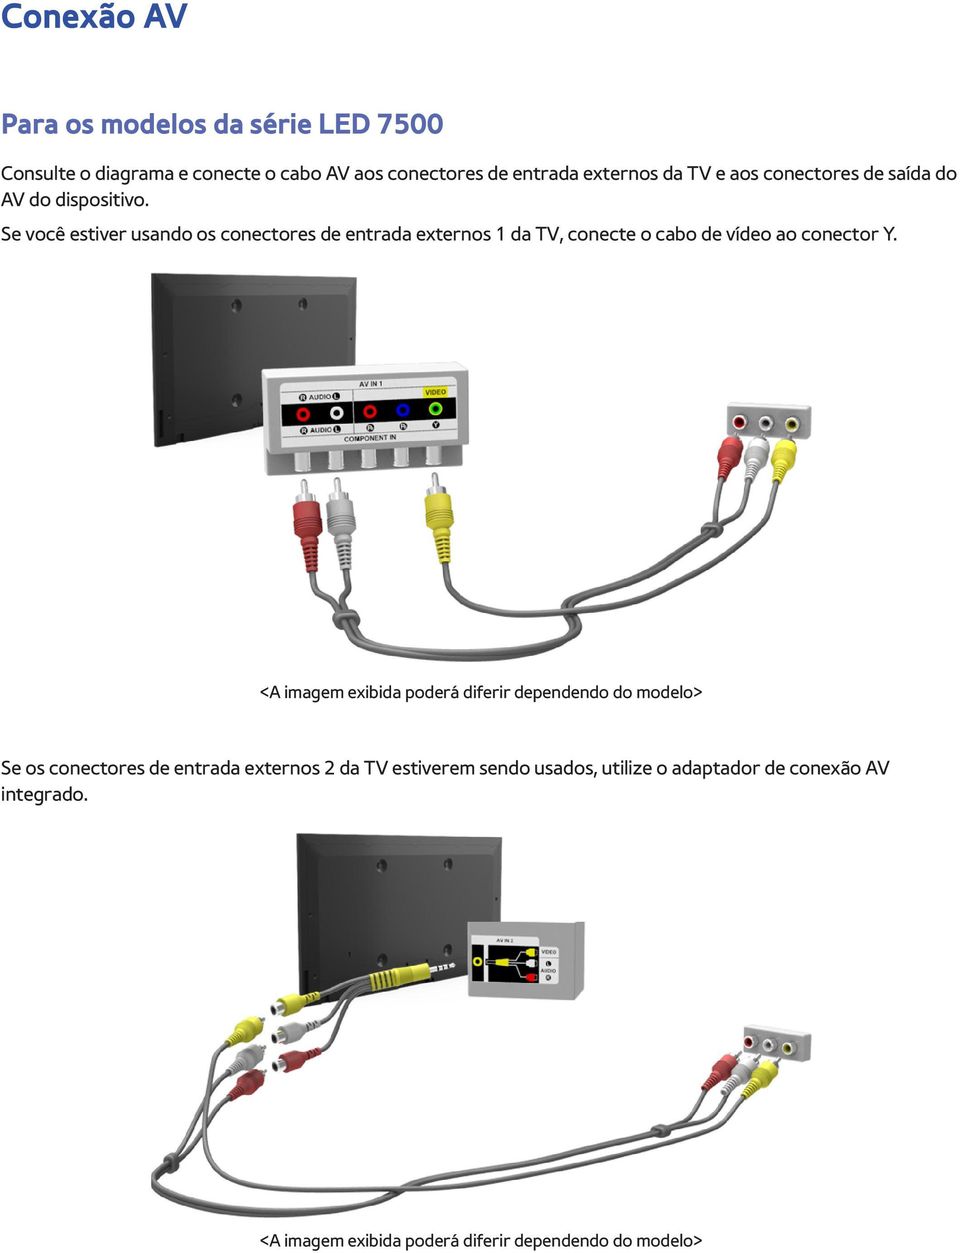 Se você estiver usando os conectores de entrada externos 1 da TV, conecte o cabo de vídeo ao conector Y.